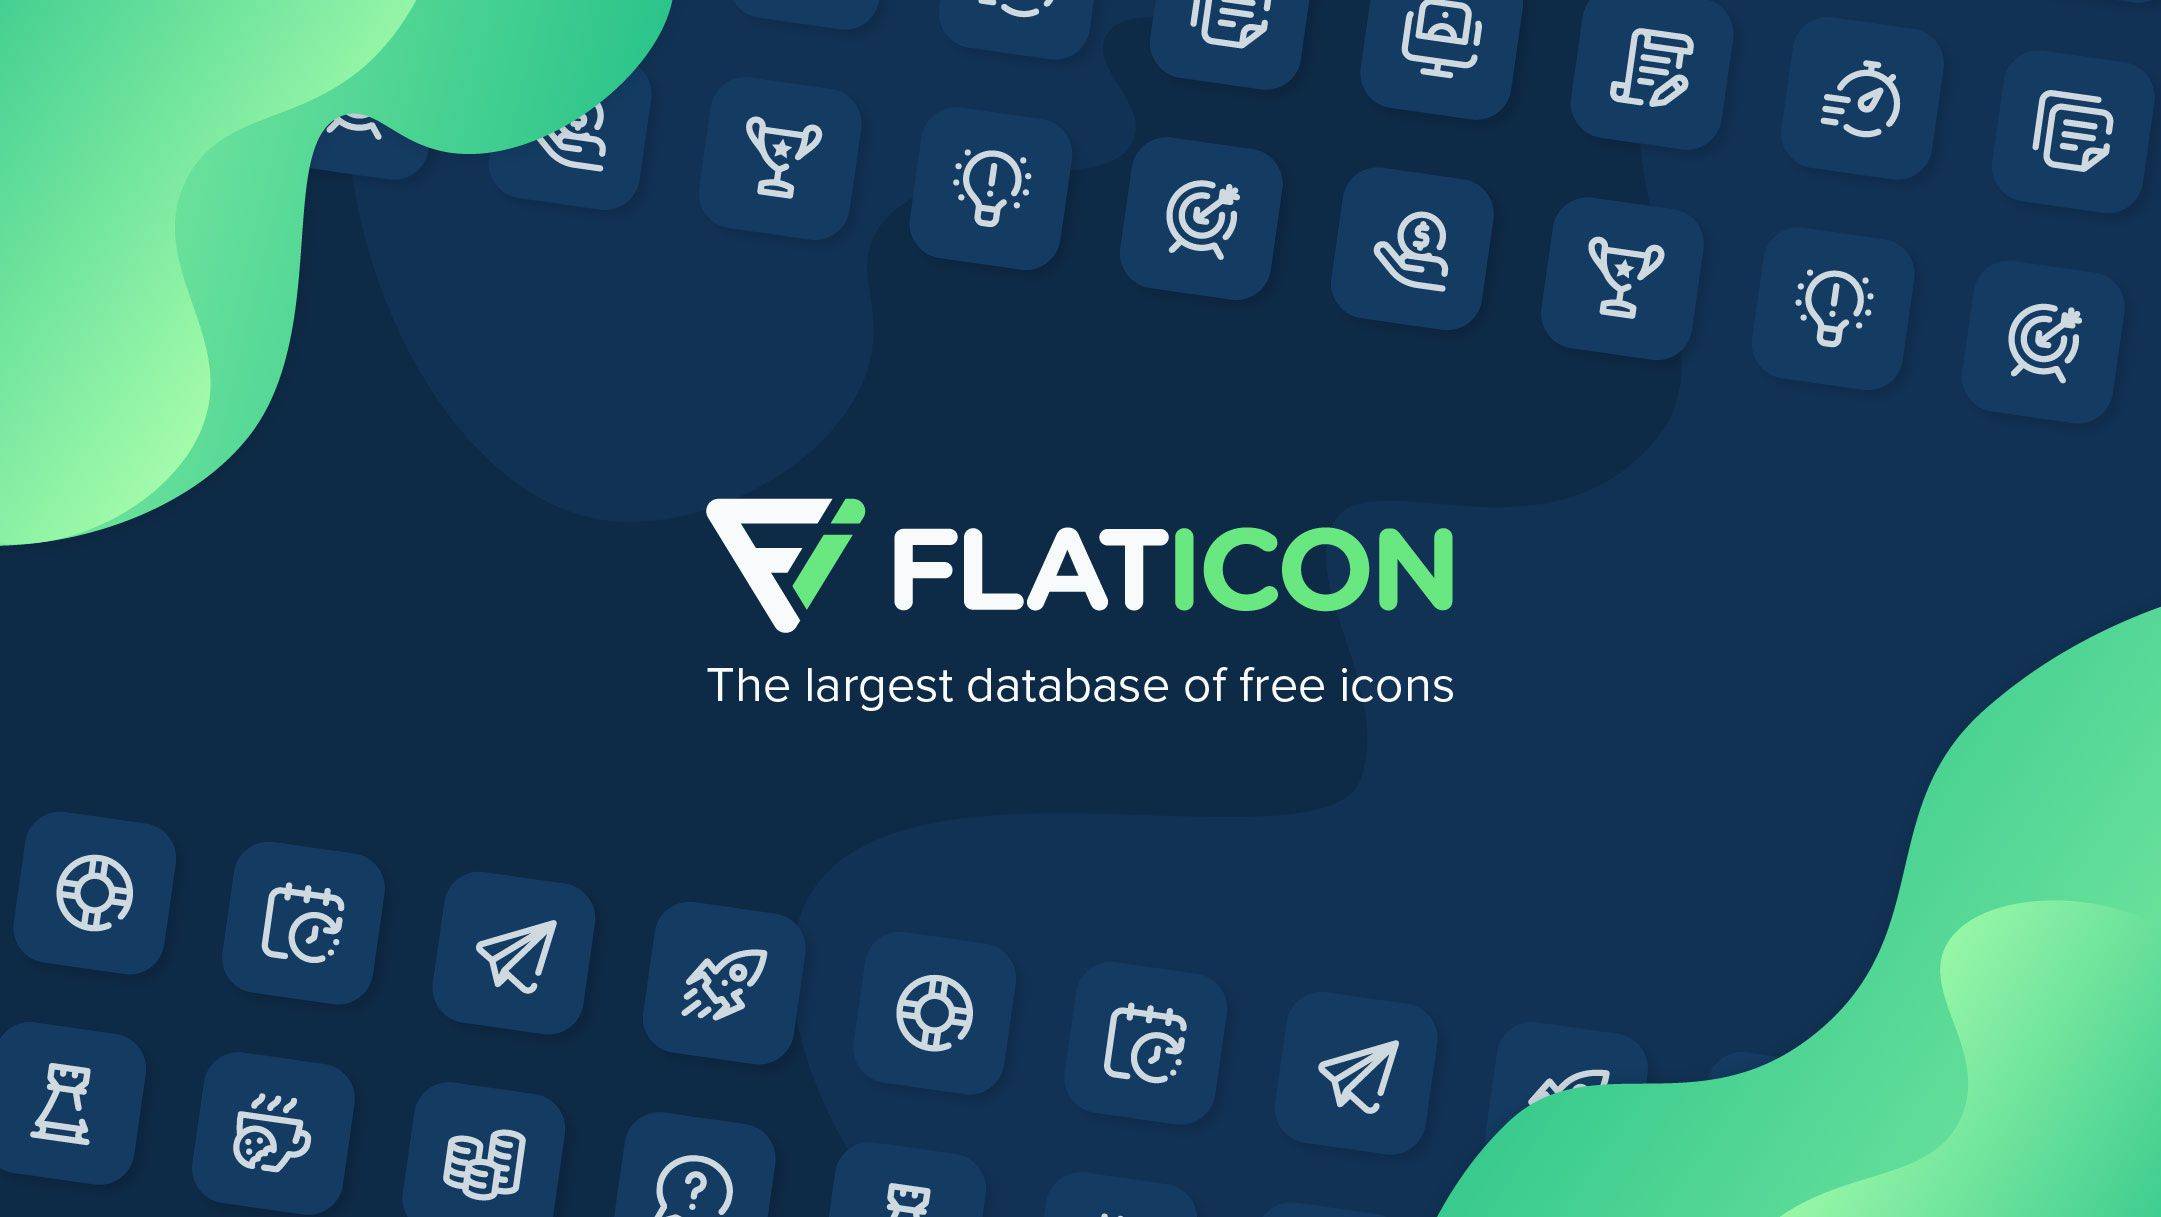 www.flaticon.com